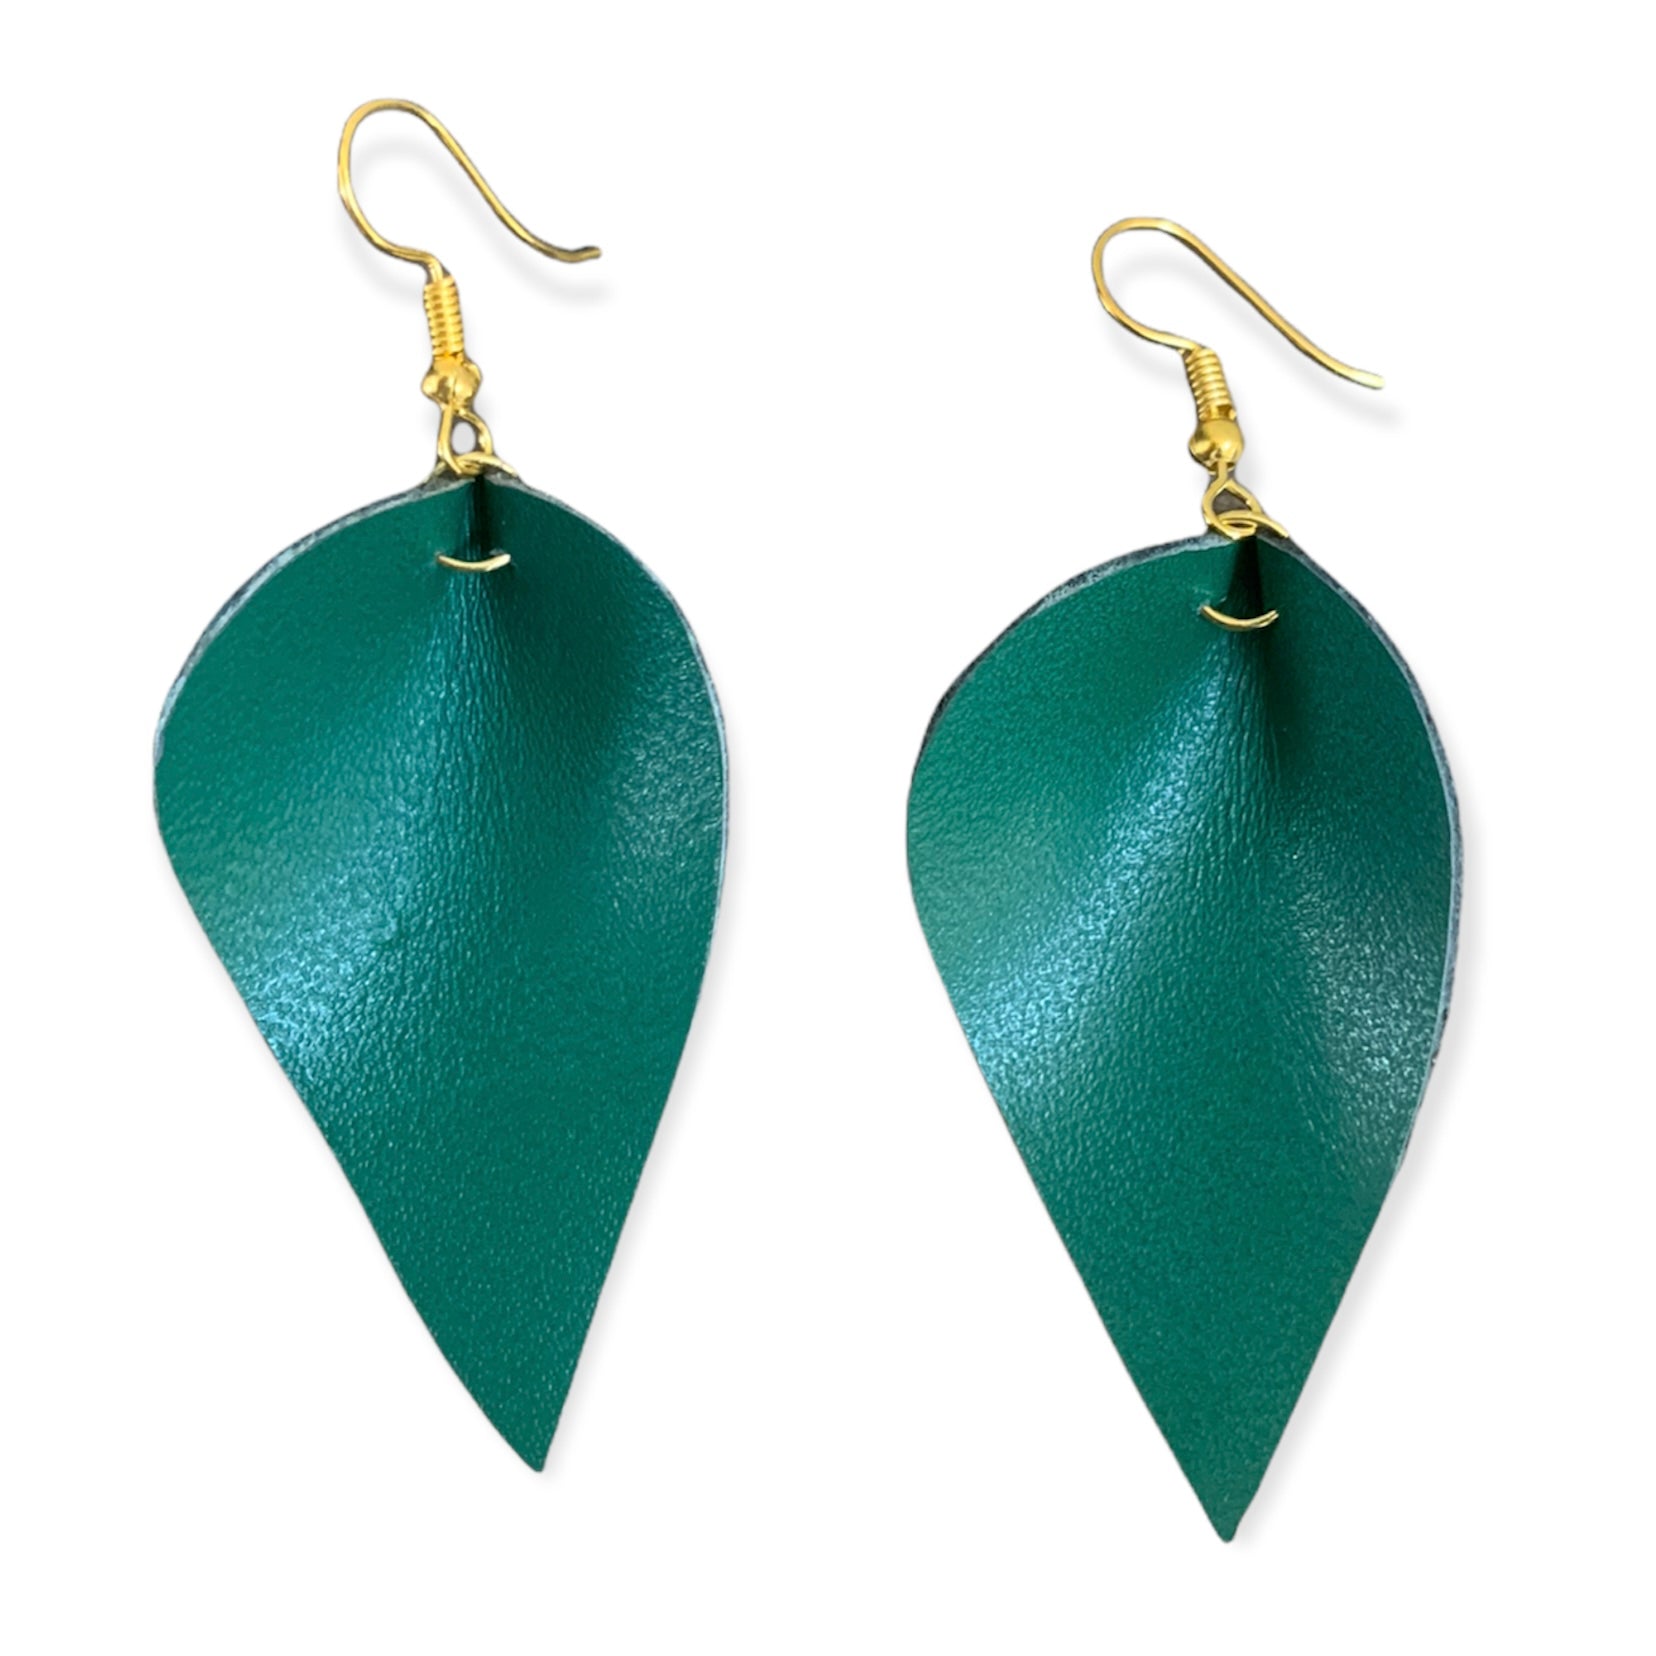 Leather leaf earrings - wide form